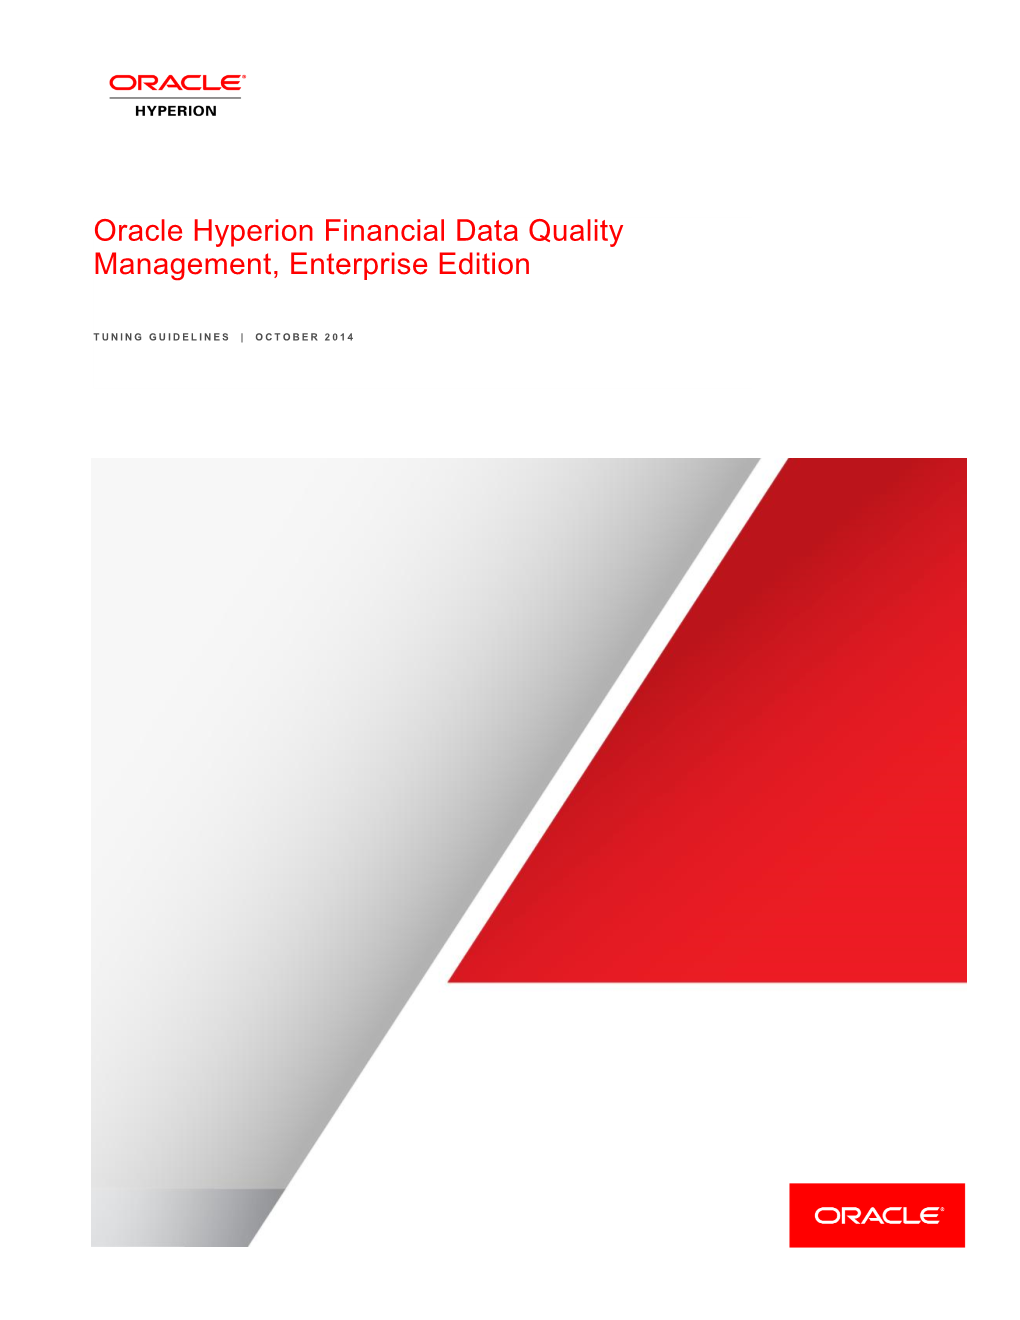 Oracle Hyperion Financial Data Quality Management, Enterprise Edition